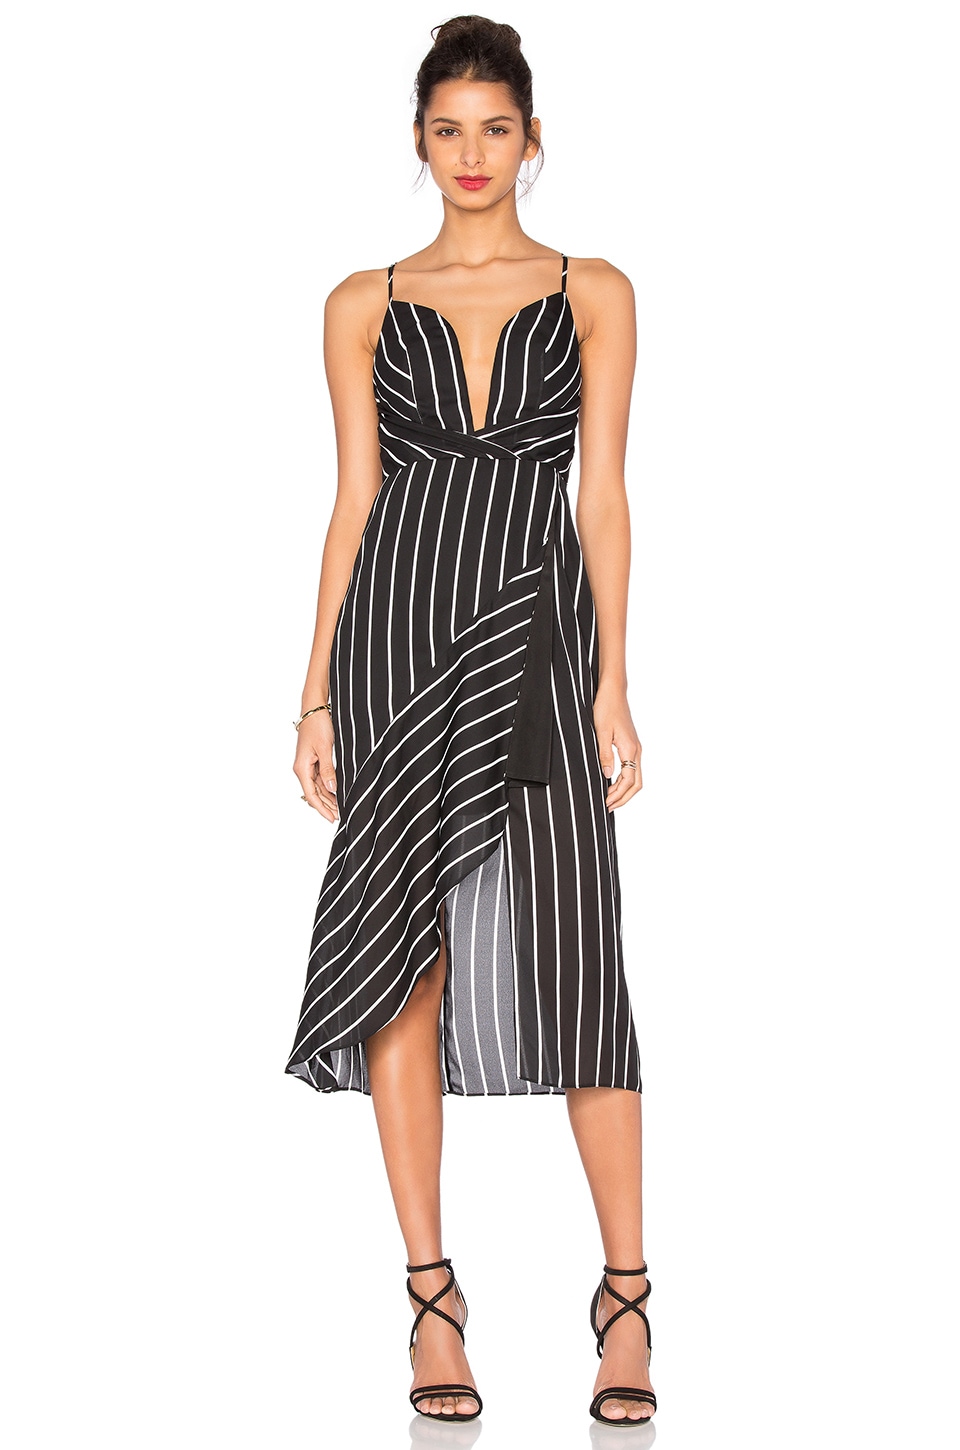 Shona Joy Isabelle Asymmetric Cocktail Dress in Black & White Stripe ...